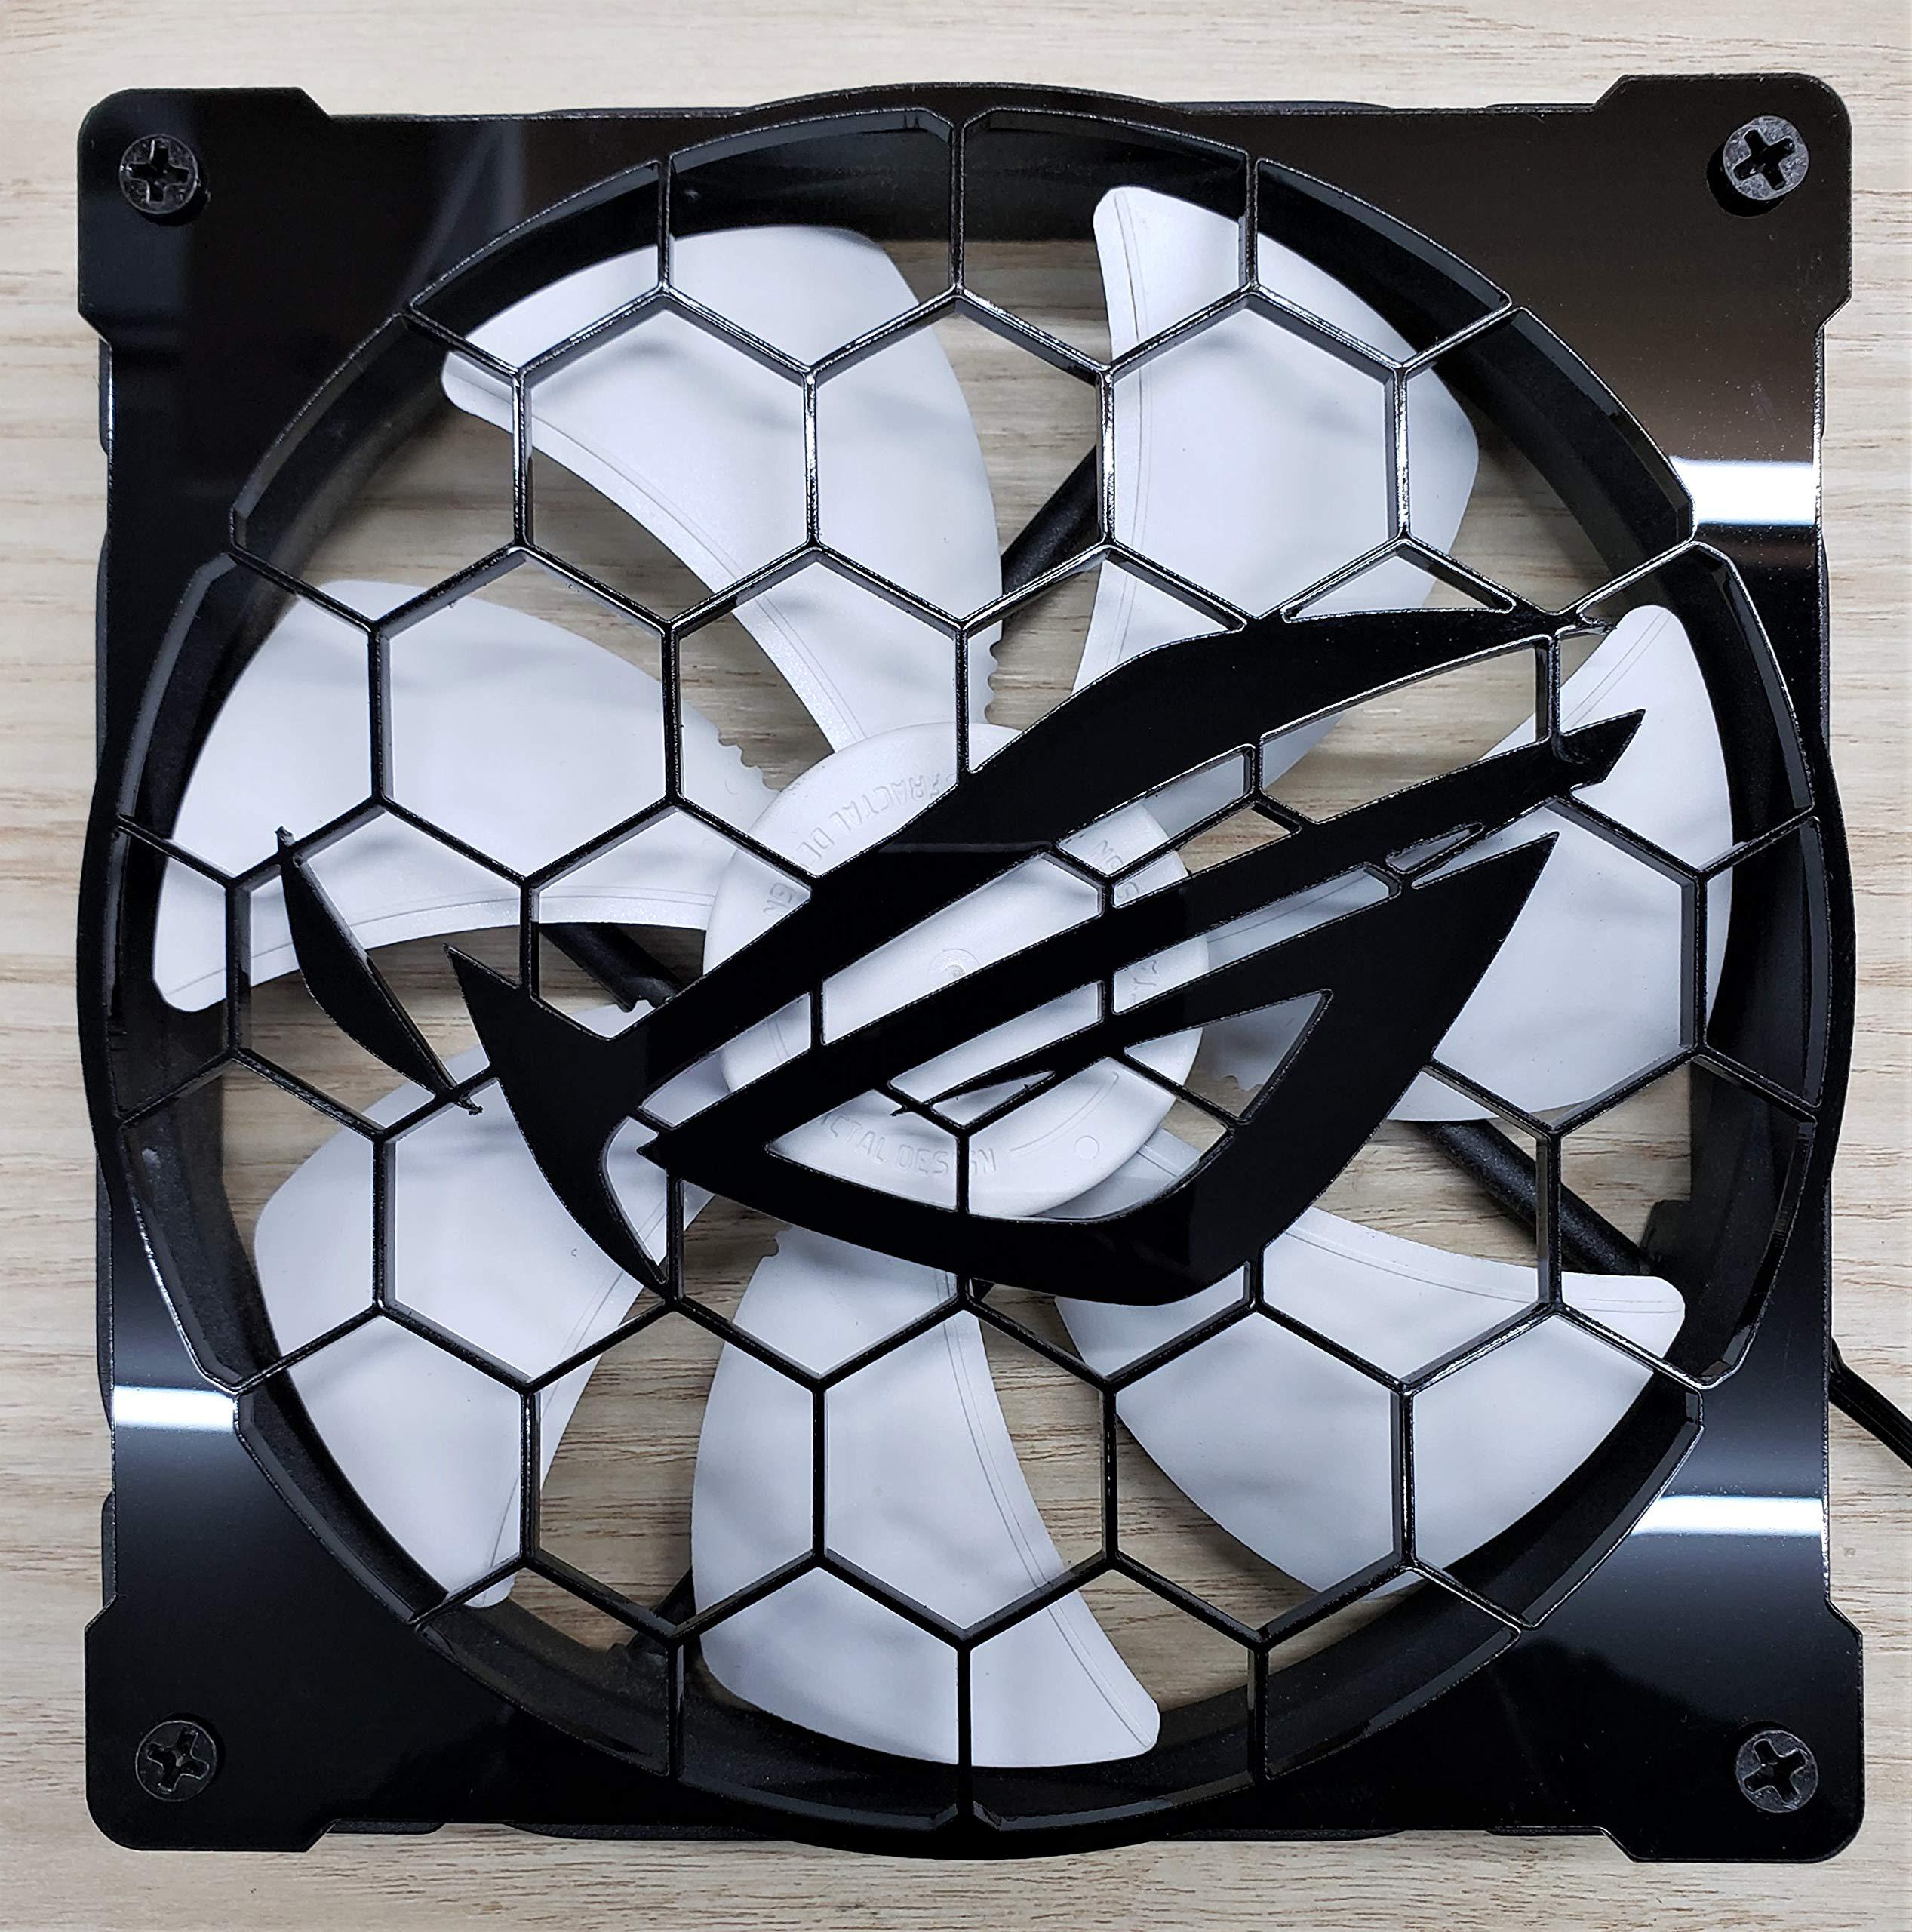 Savant PCs 140mm computer case fan cover with unique hexagon asus rog design - great for rgb argb led lighting - black